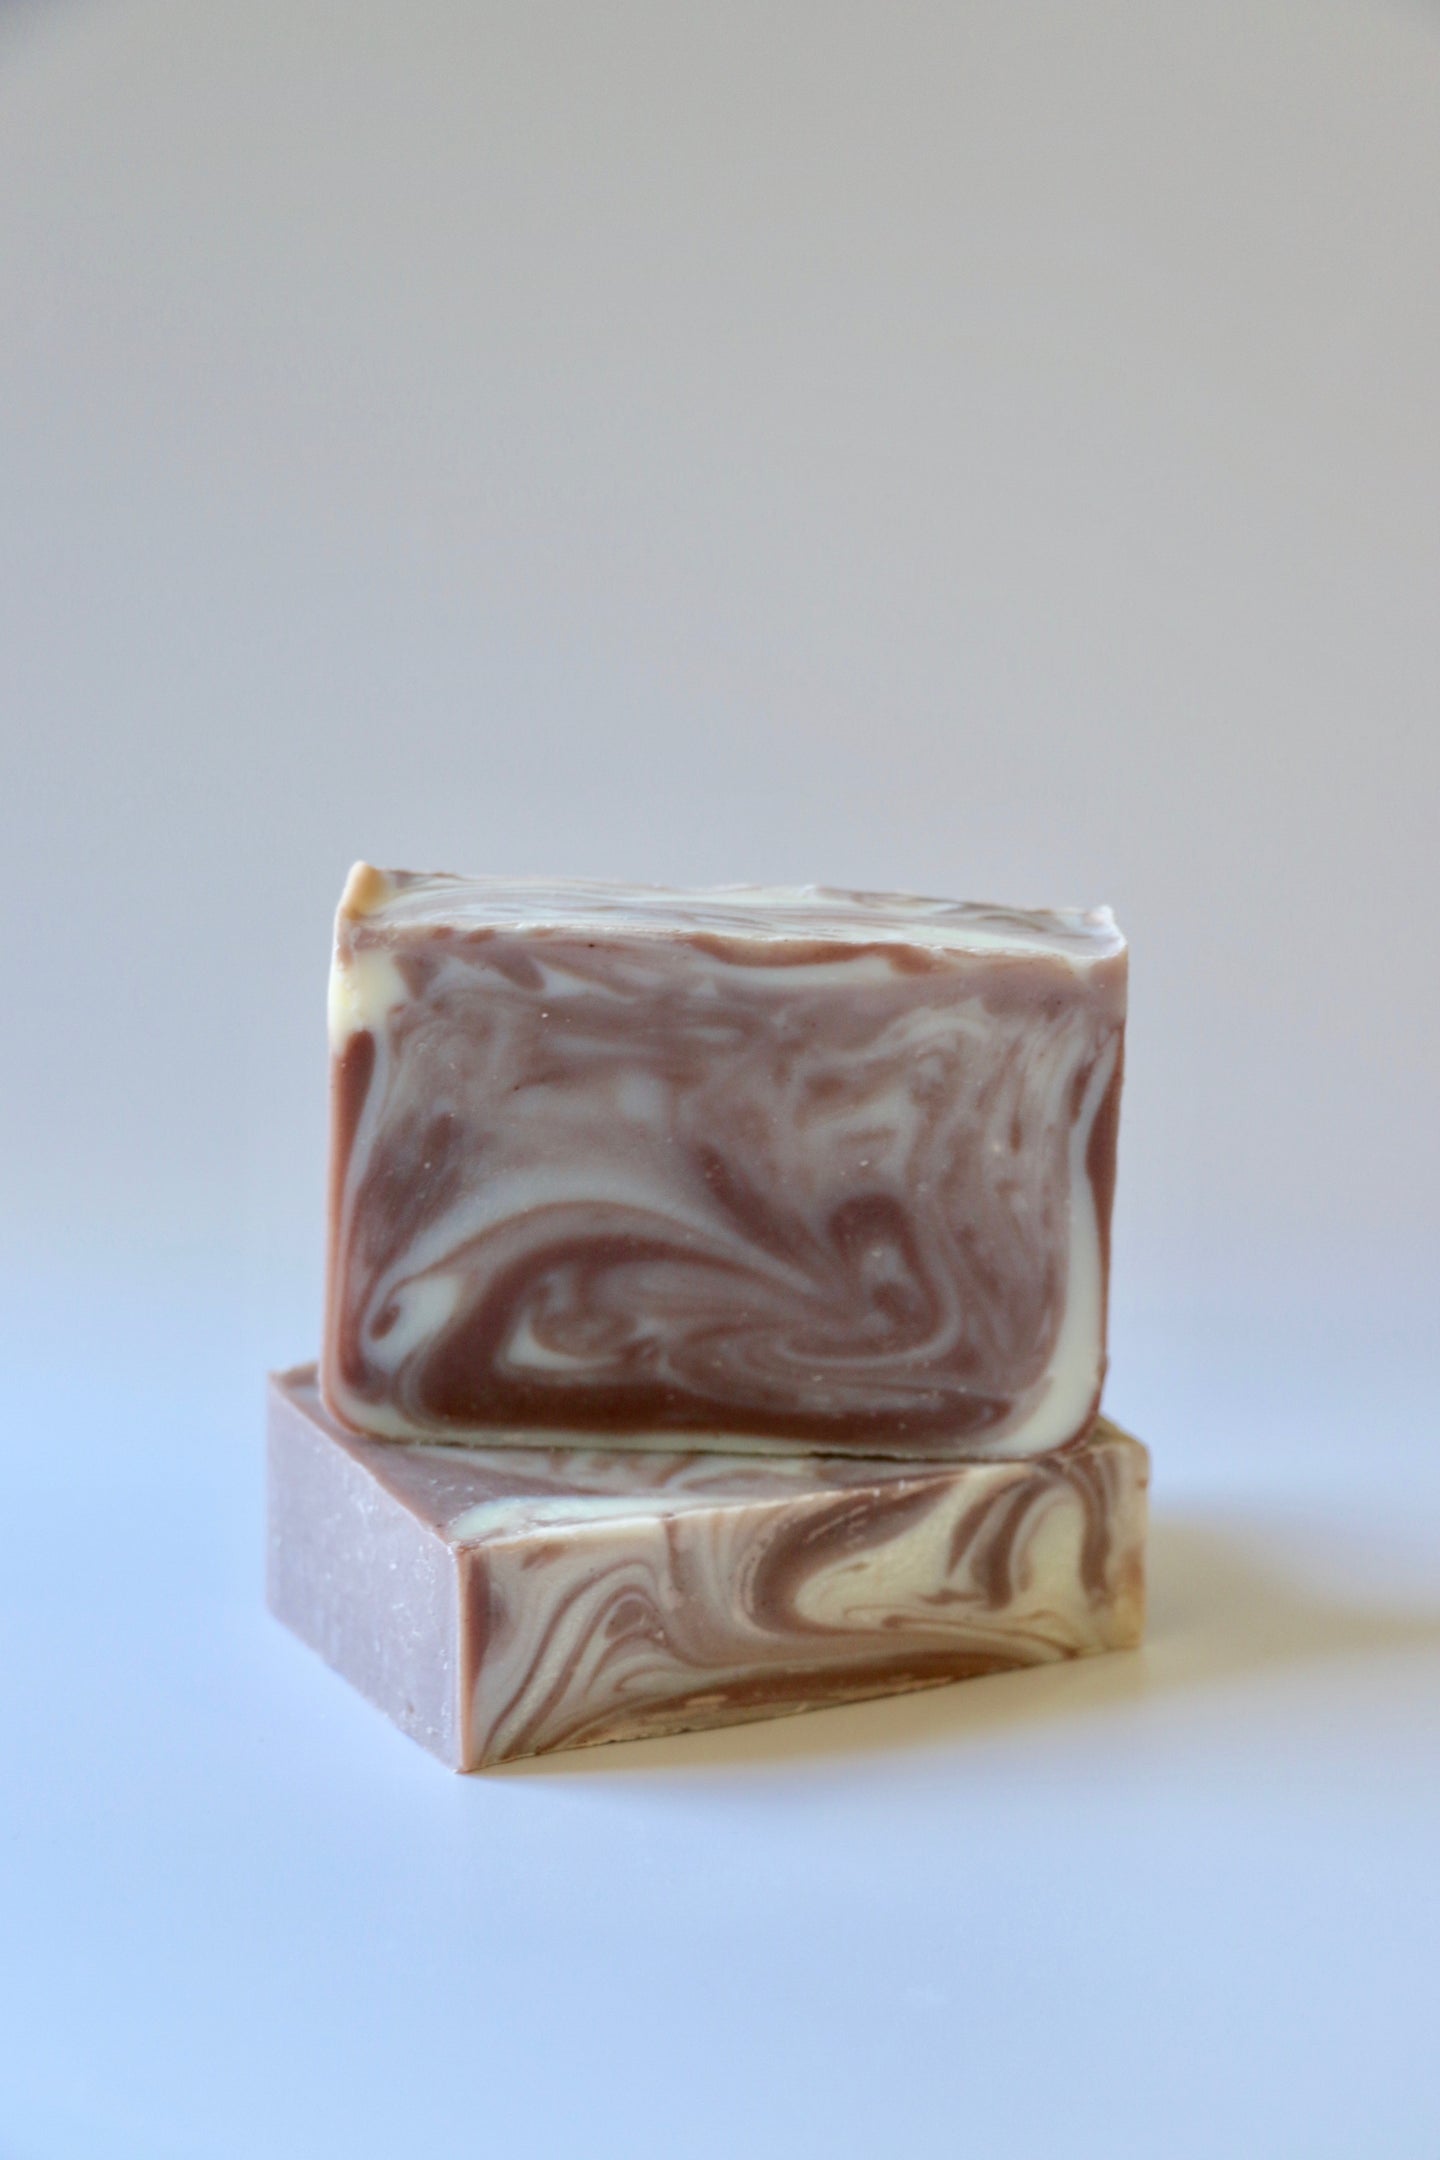 Purple Brazilian clay with white swirls. Handcrafted natural soap. Ishtahfeetah soapery.